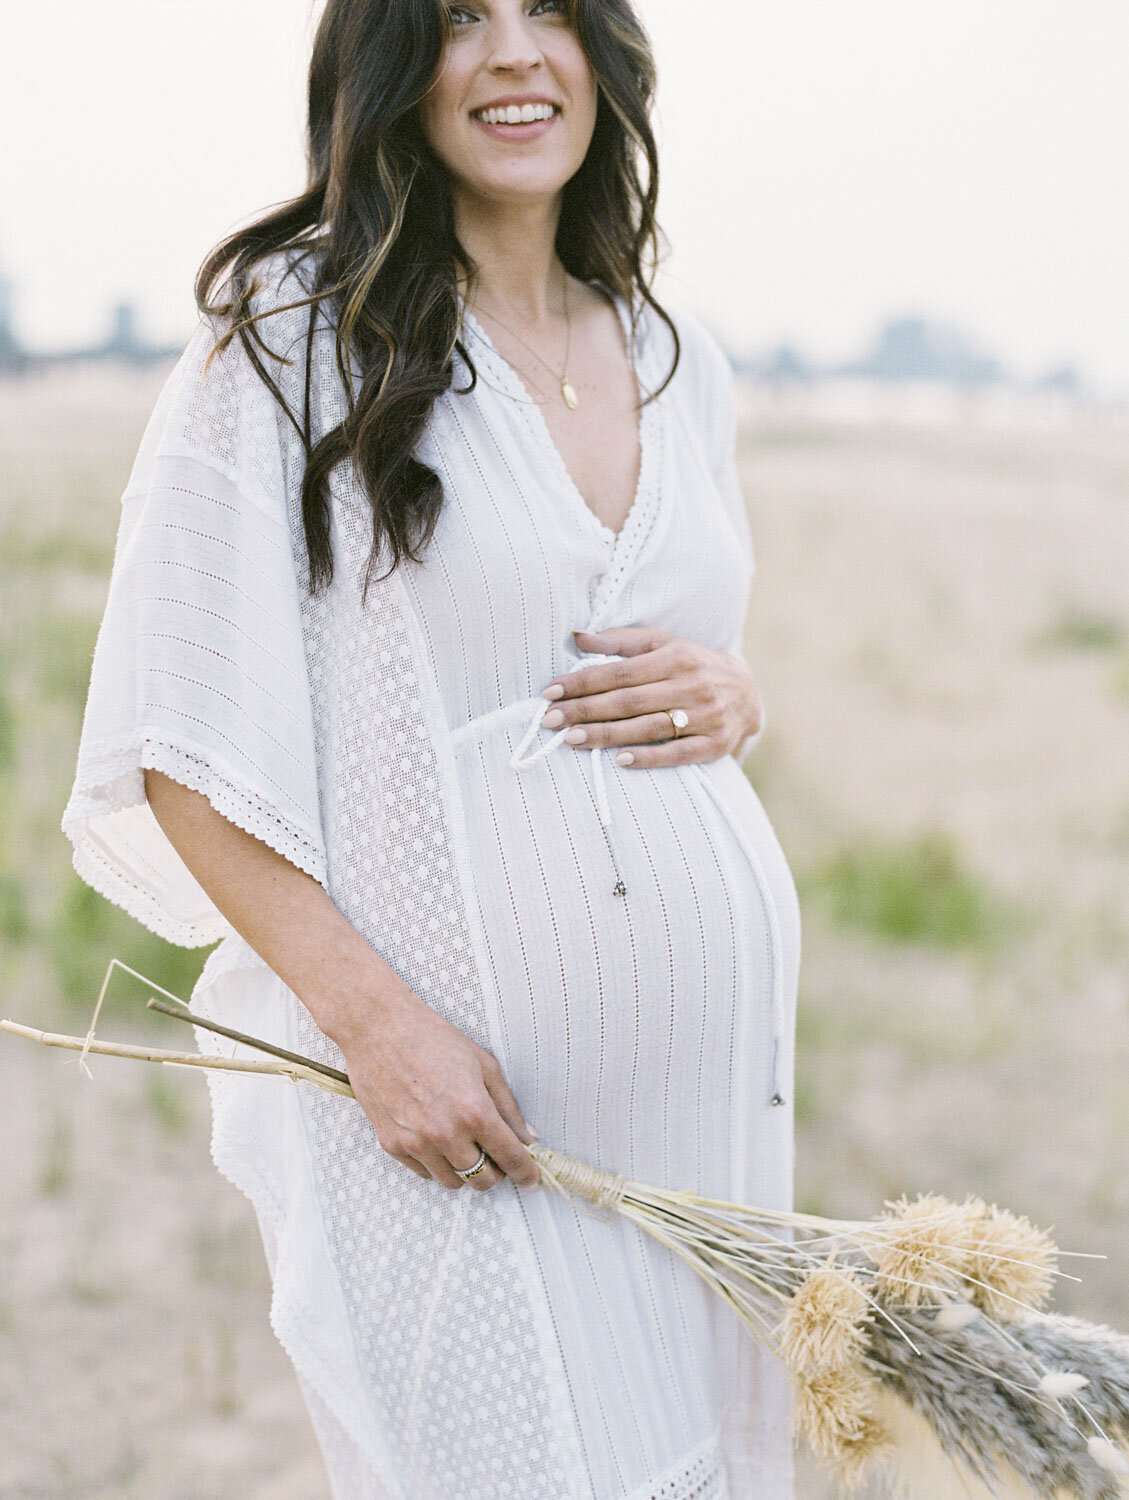 chicago-maternity-photographer-cristina-hope-photography_12